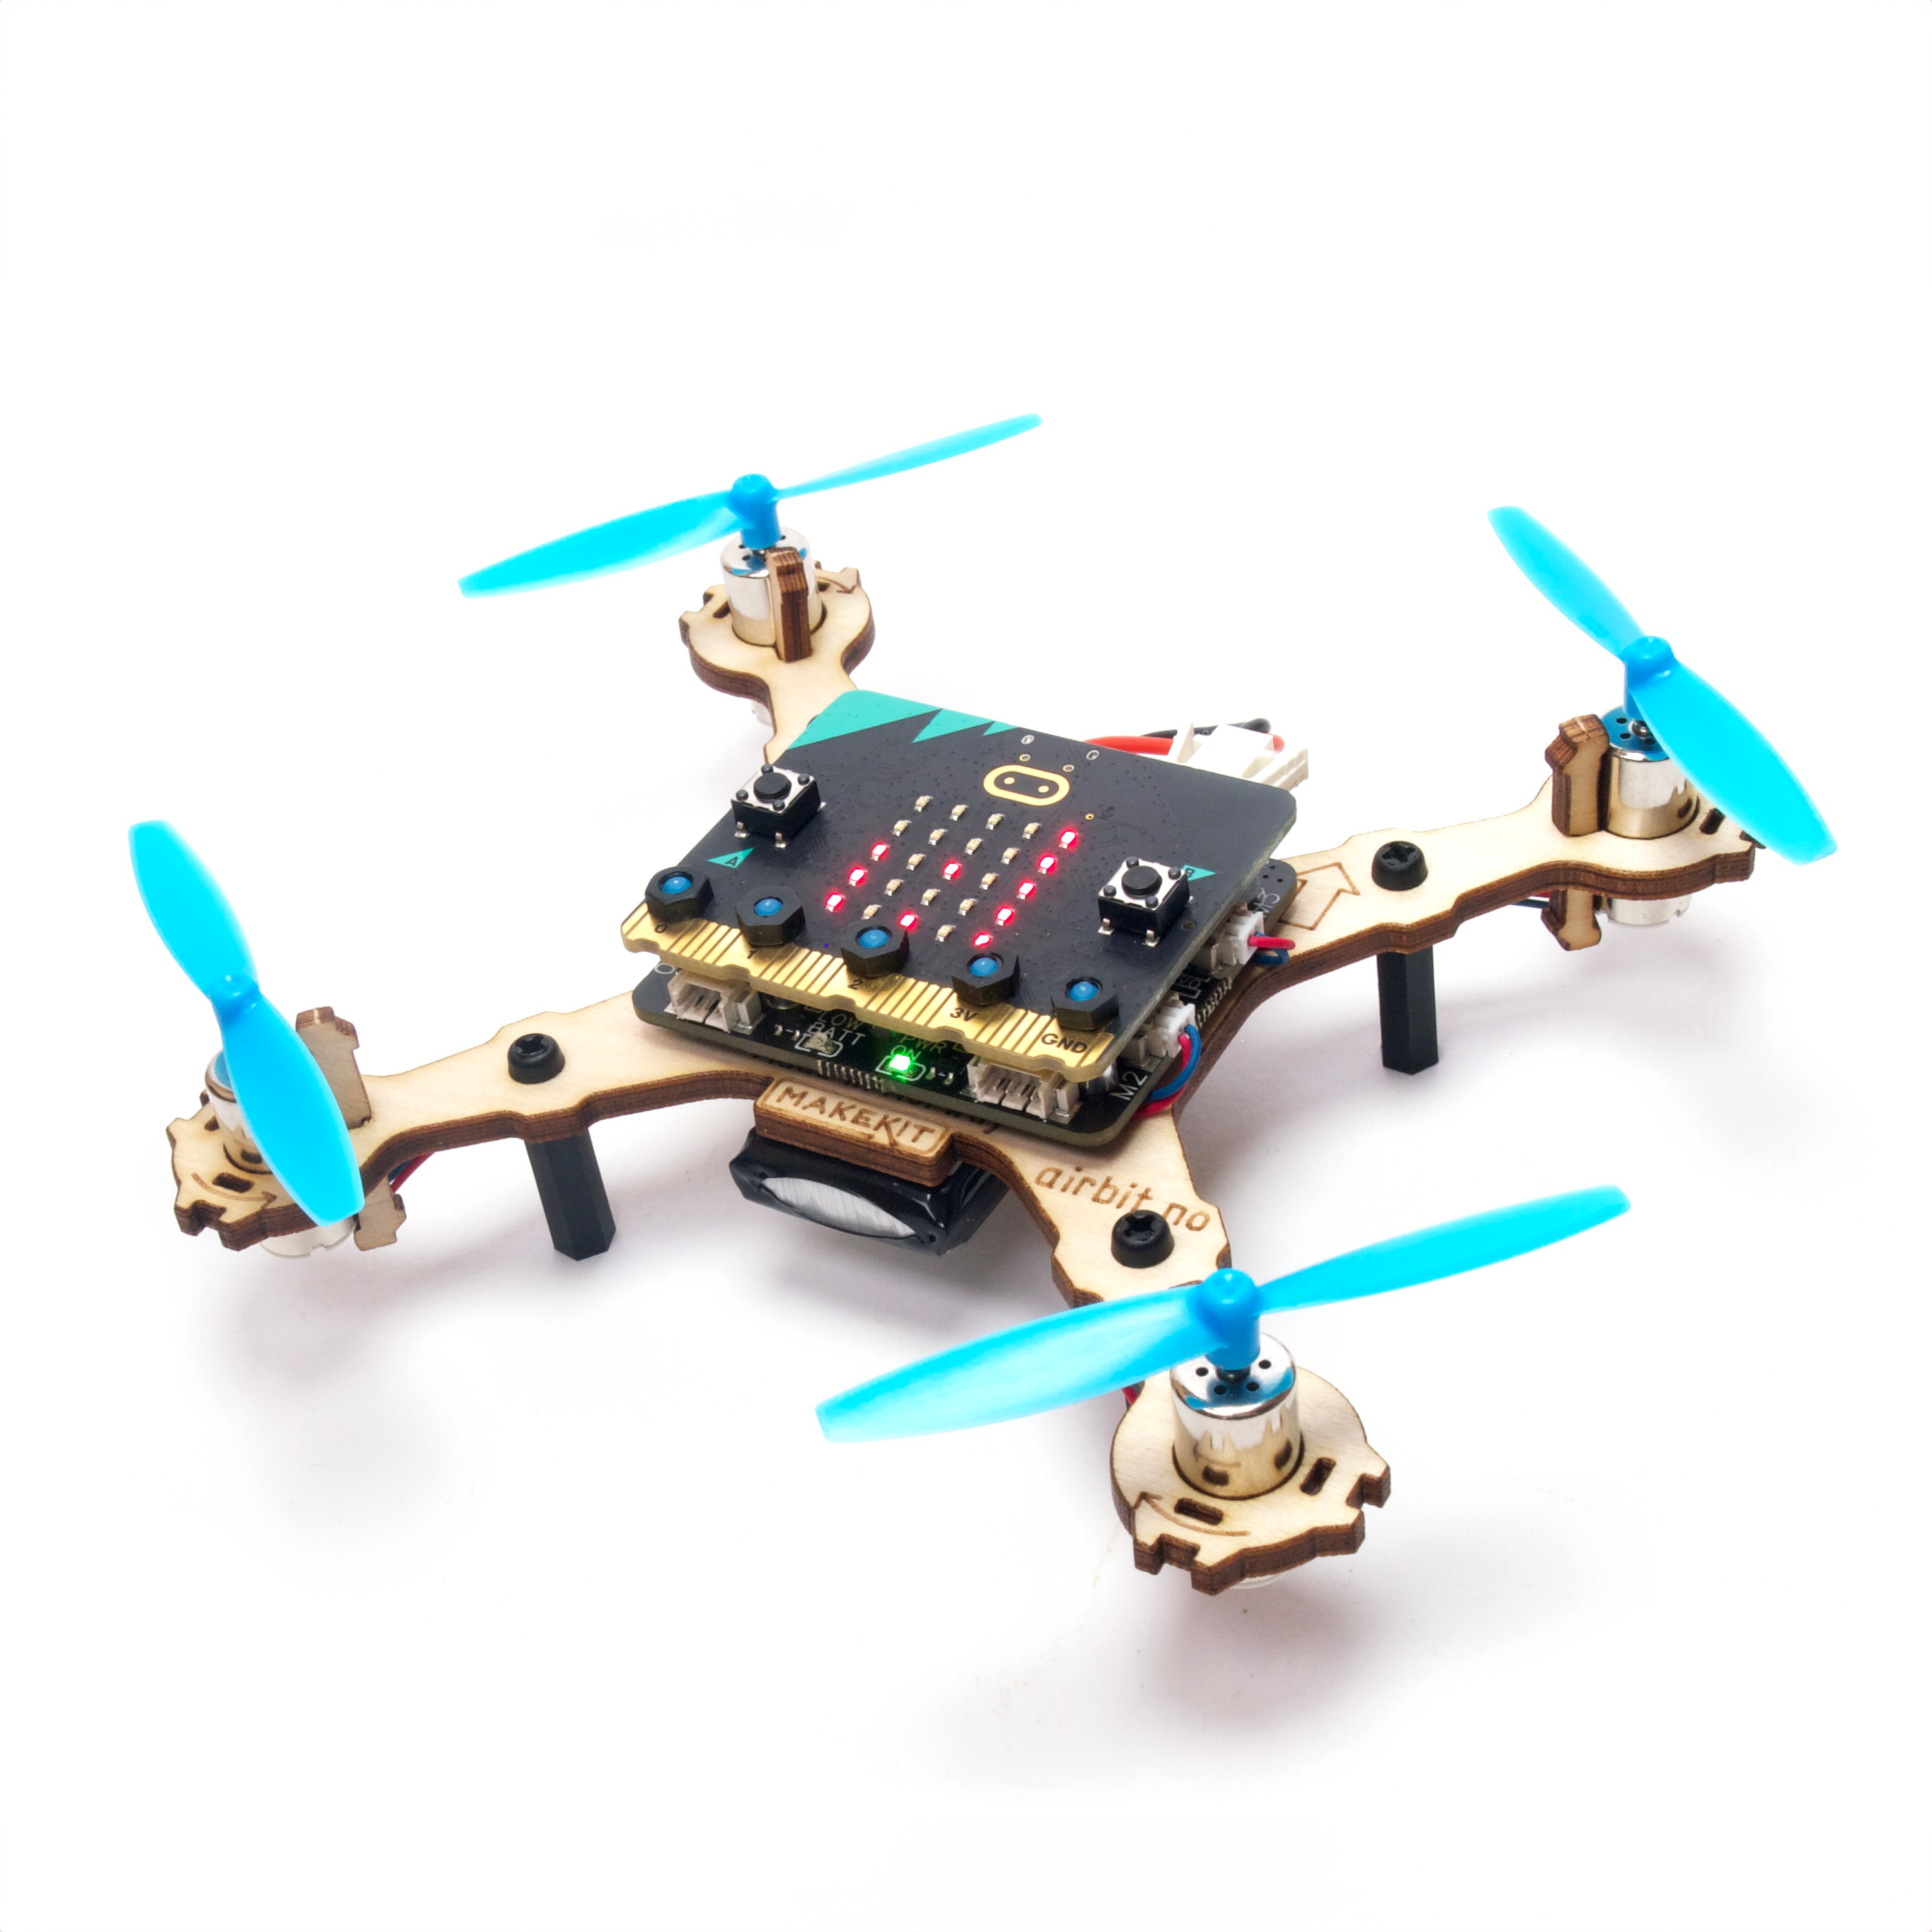 Air:bit 2 - Programmable Drone Construction Kit